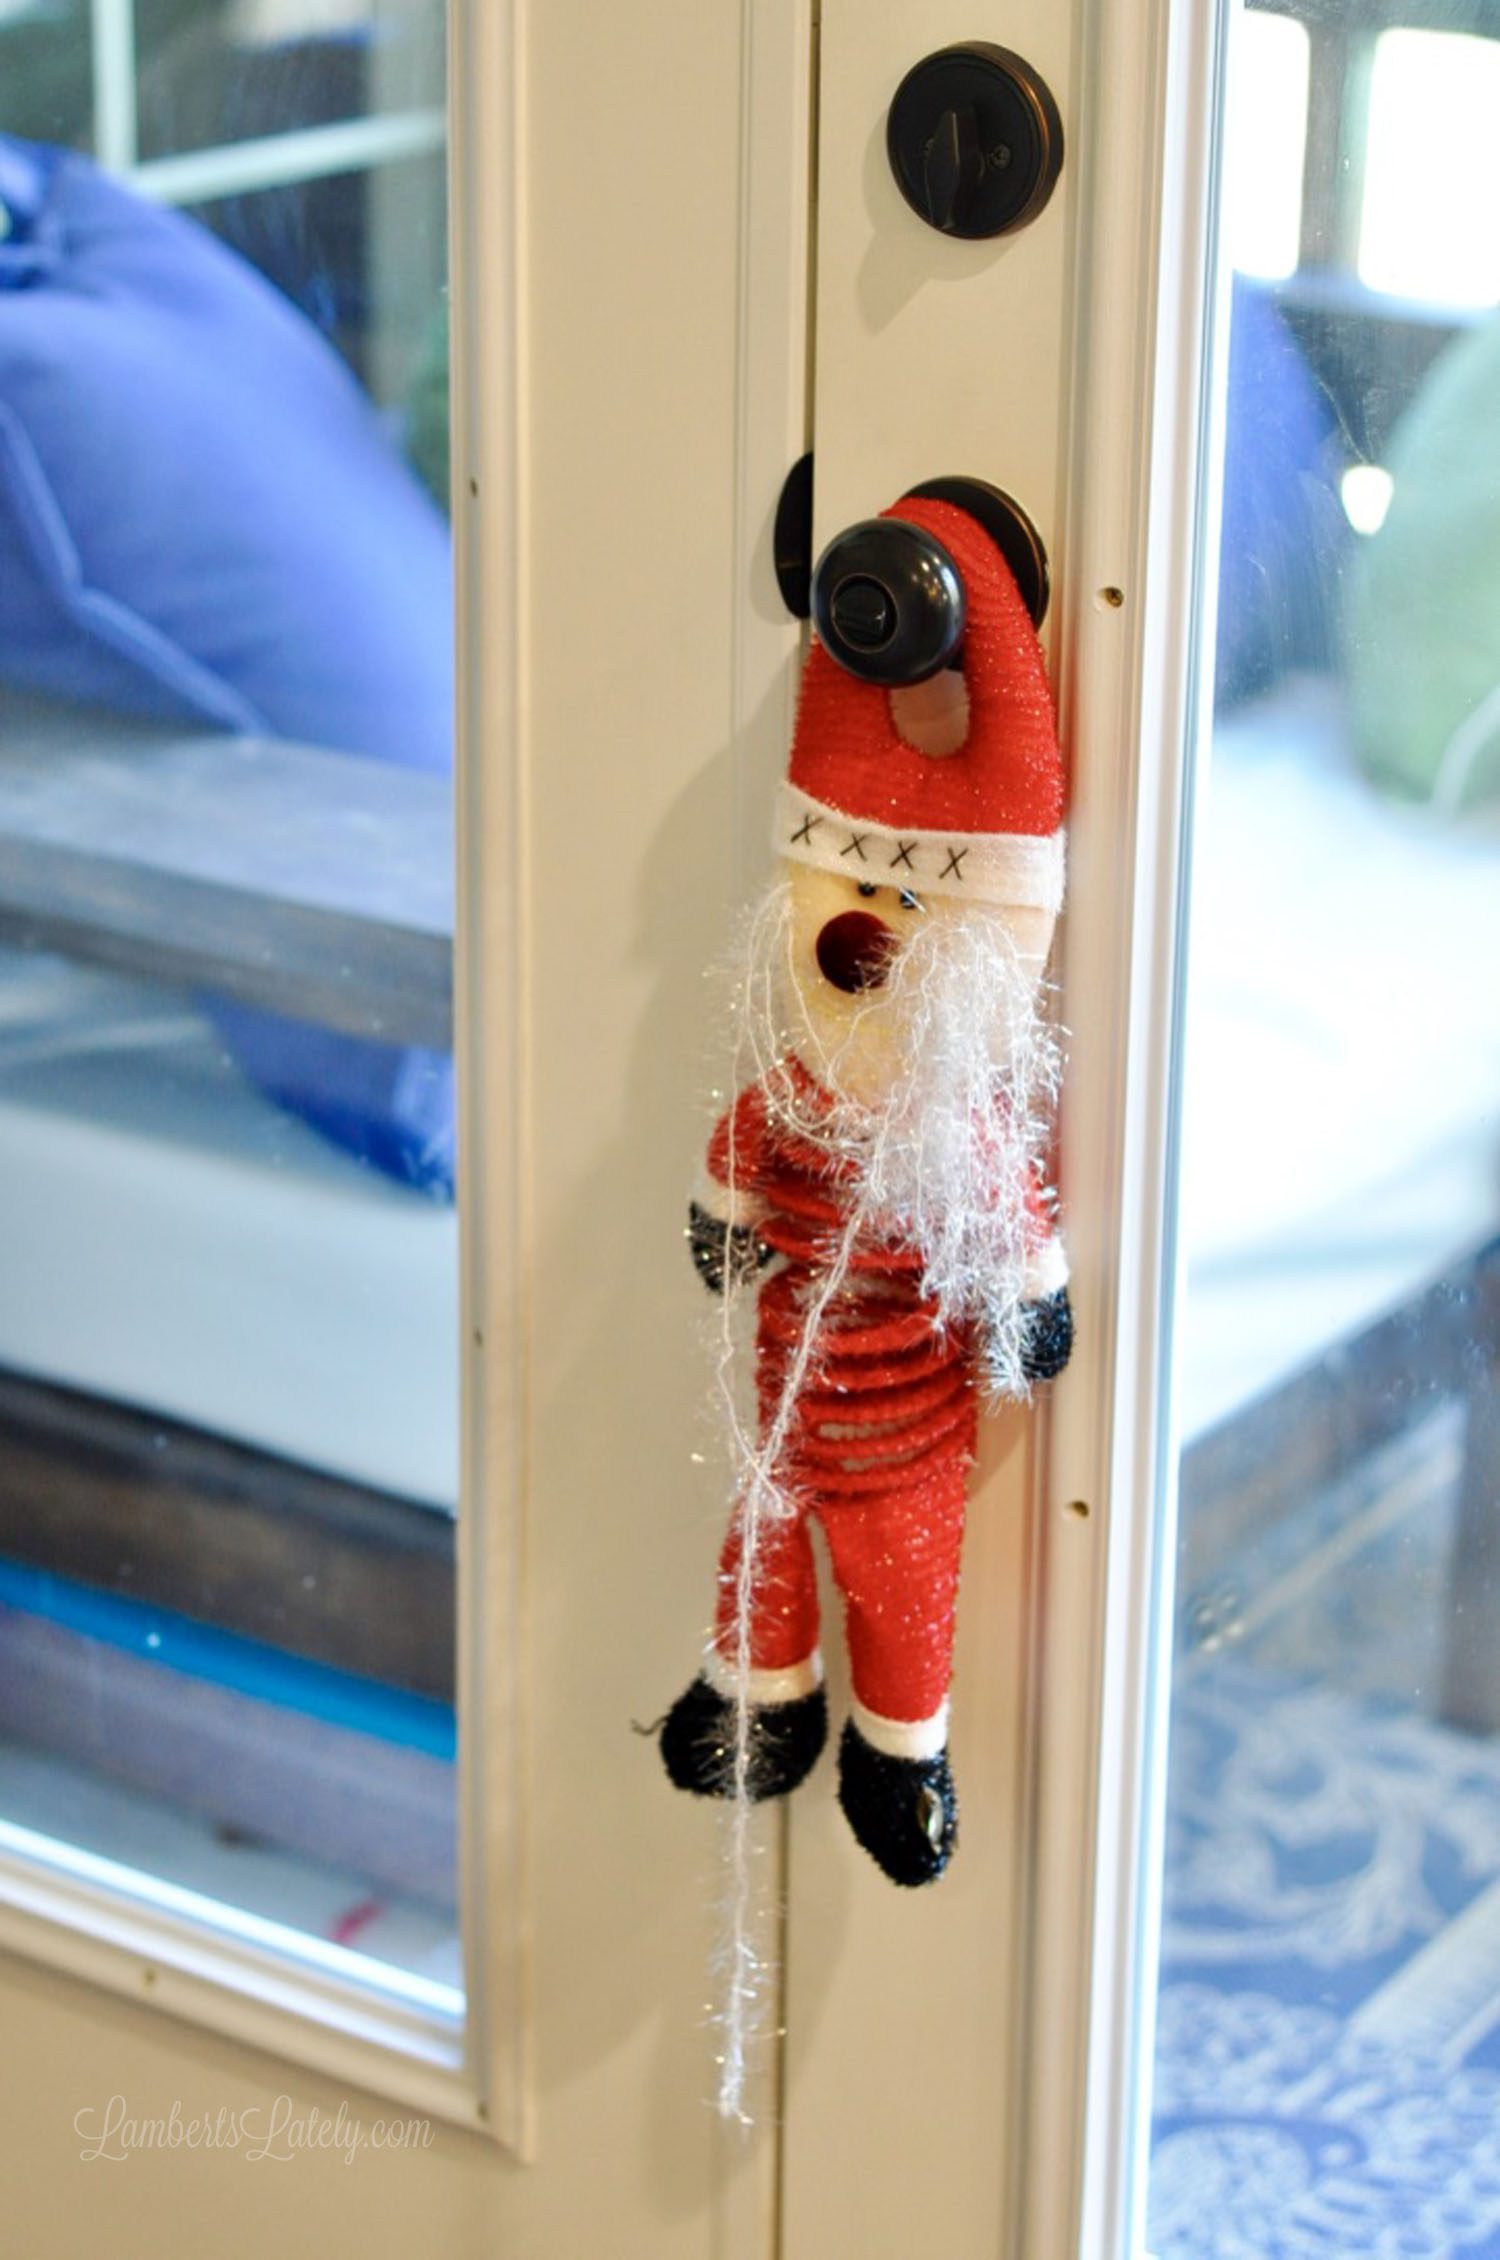 santa claus figure hanging on a doorknob.